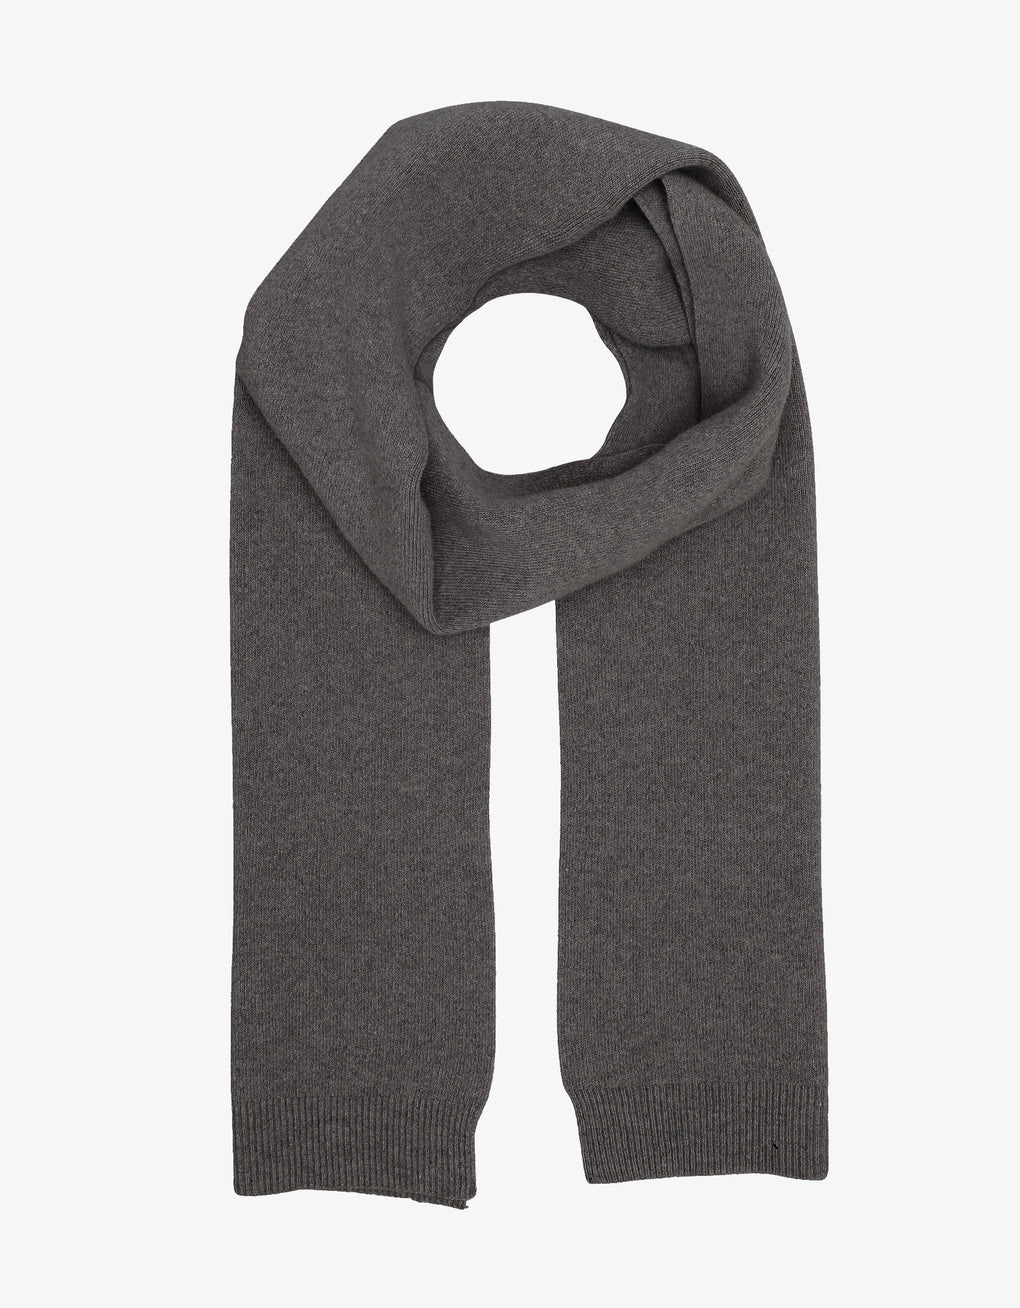 Merino wool scarf in lava grey